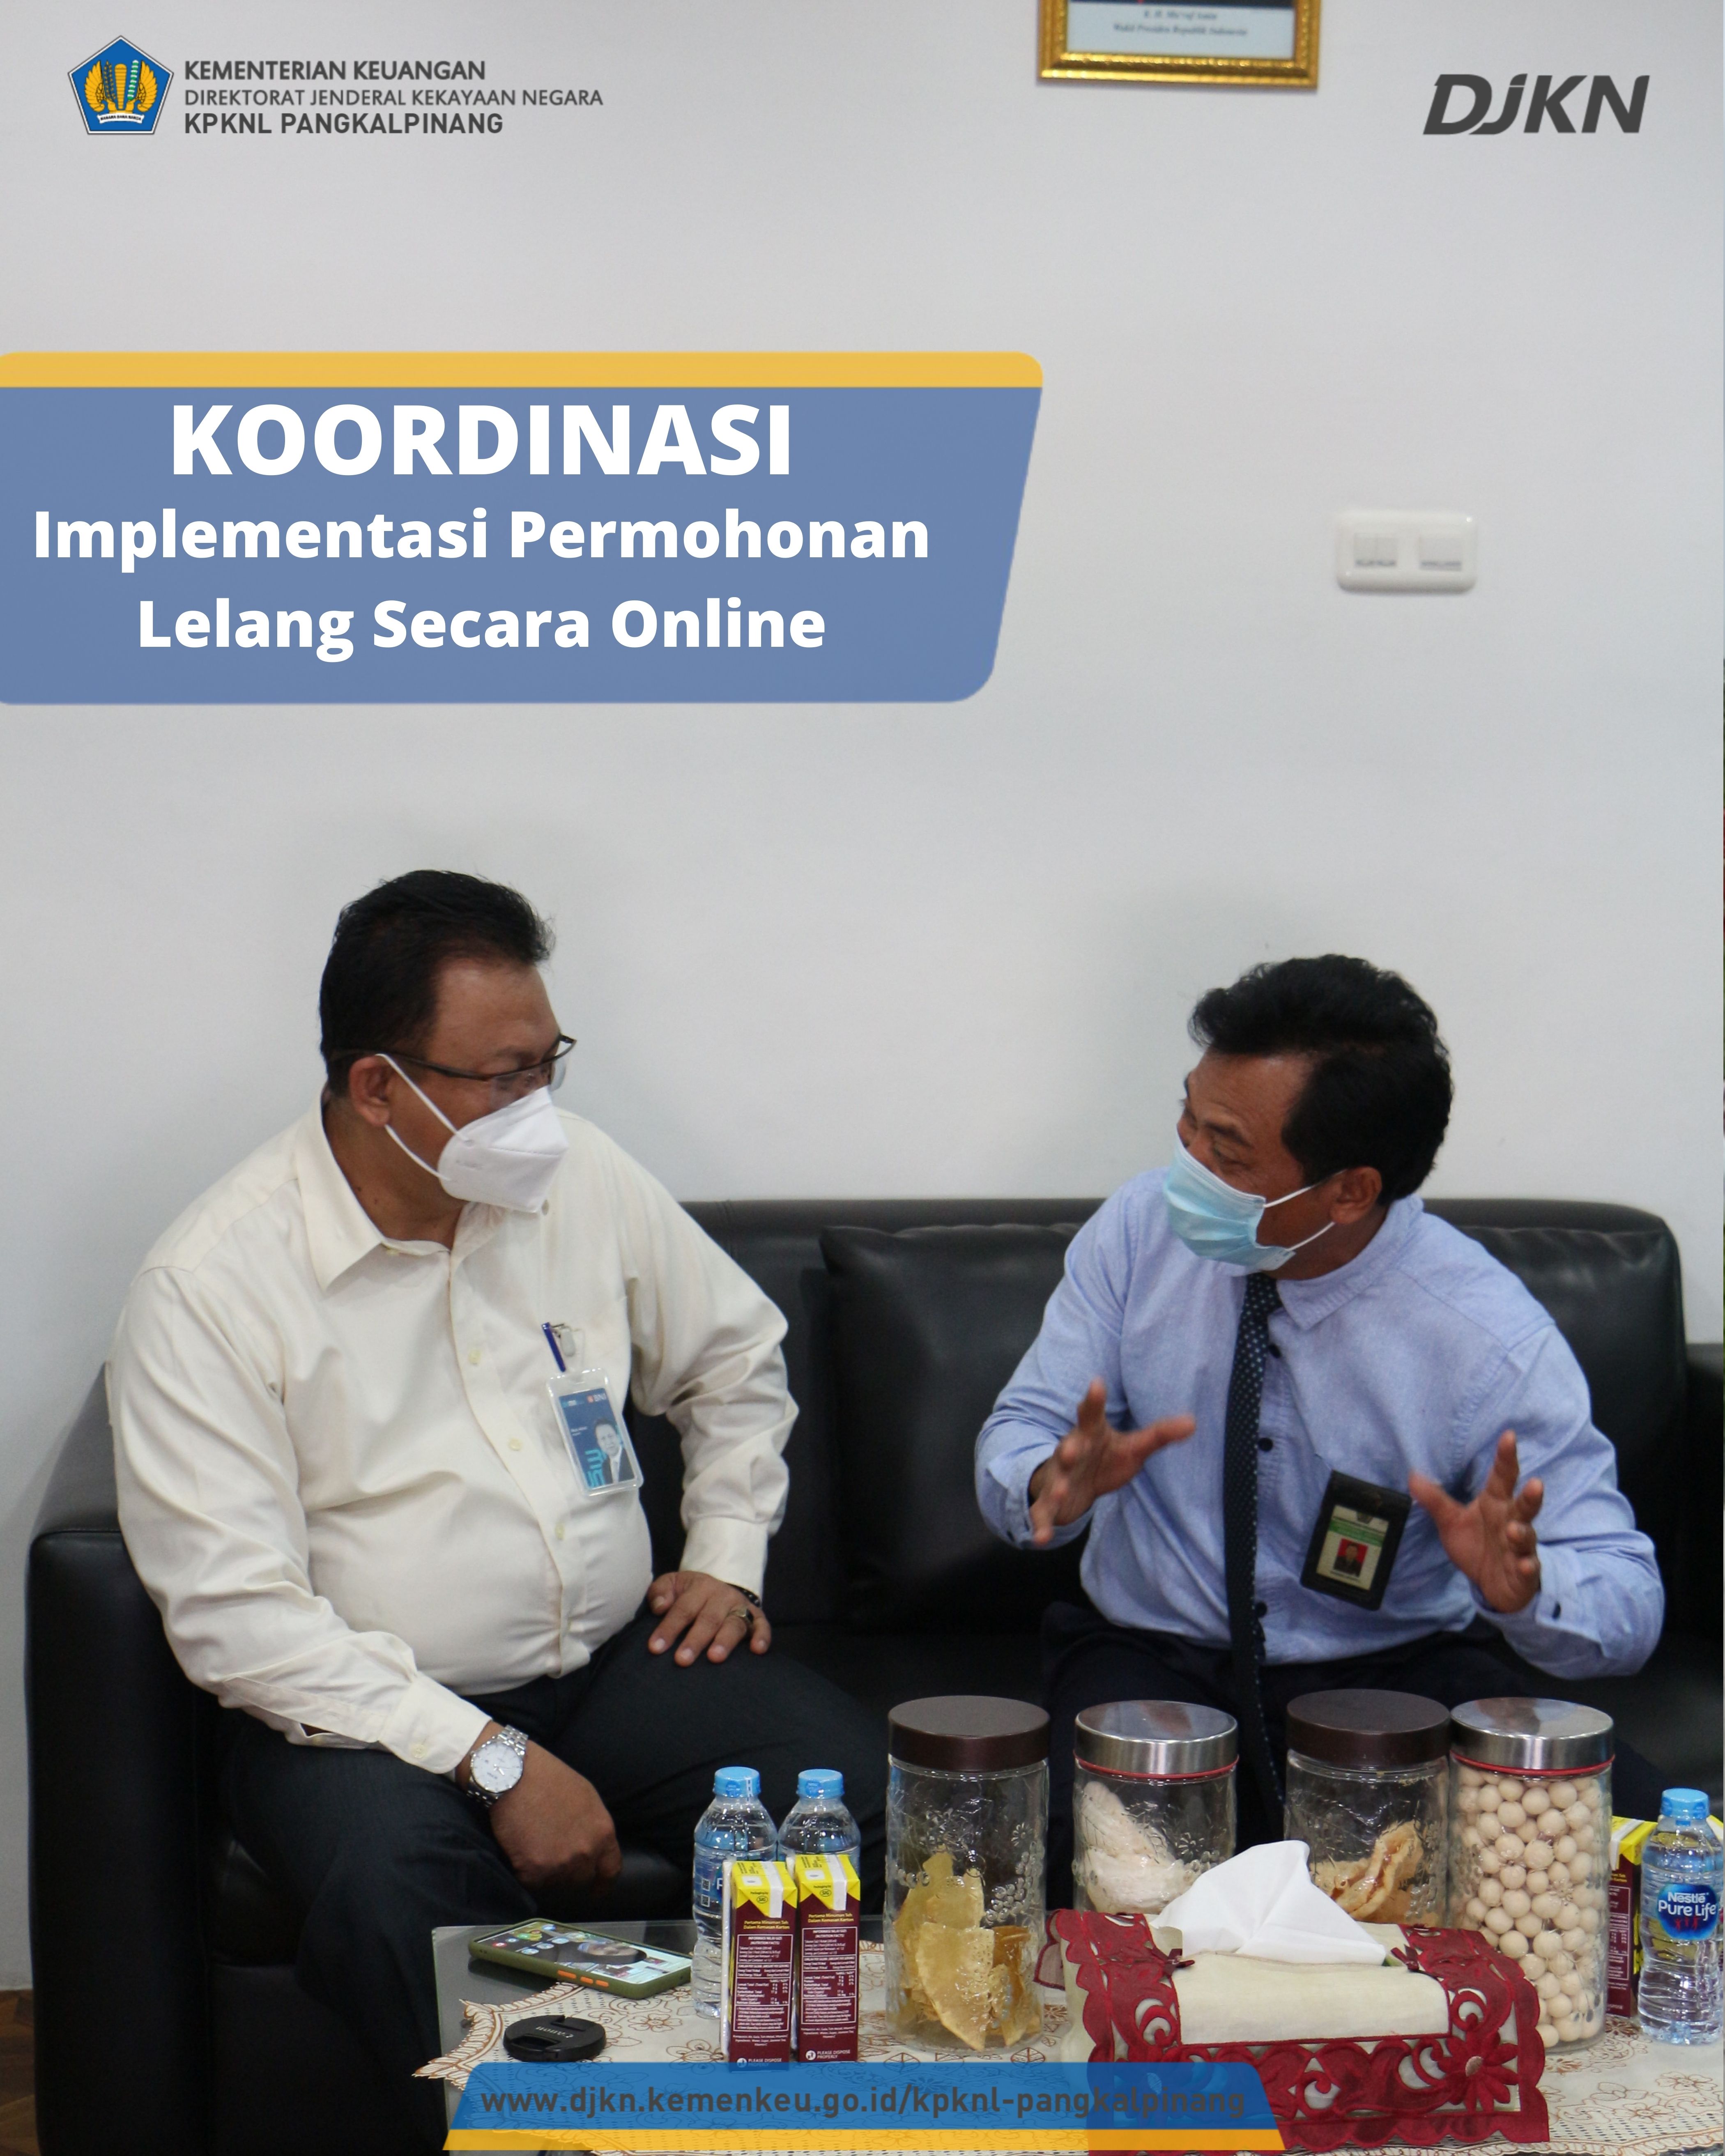 KPKNL Pangkalpinang Koordinasikan Implementasi Permohonan